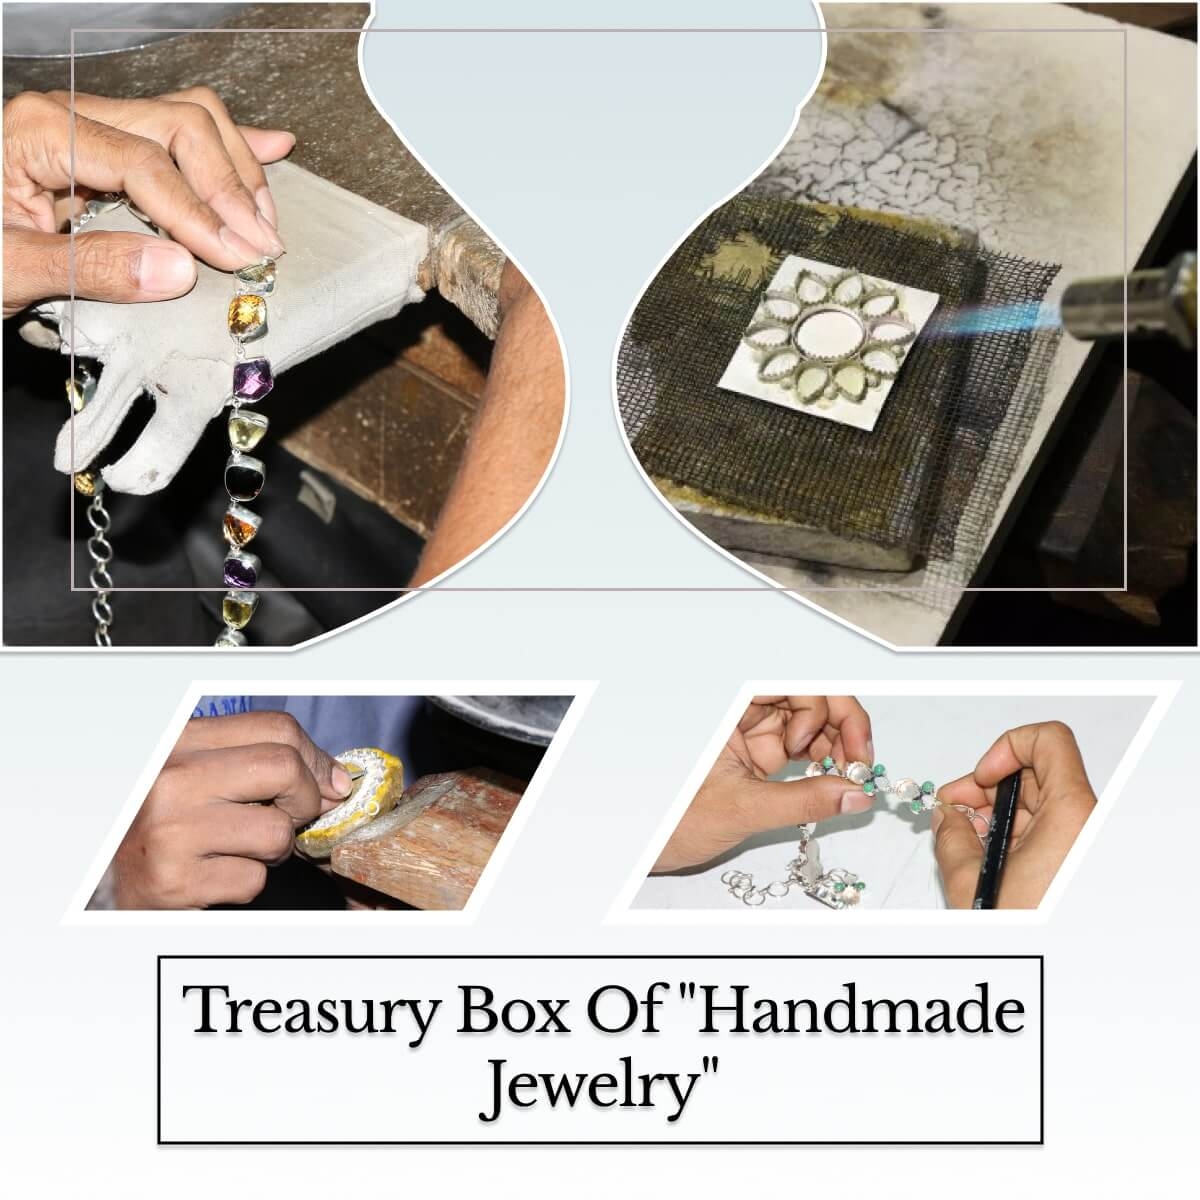 Handmade Gemstone Jewelry